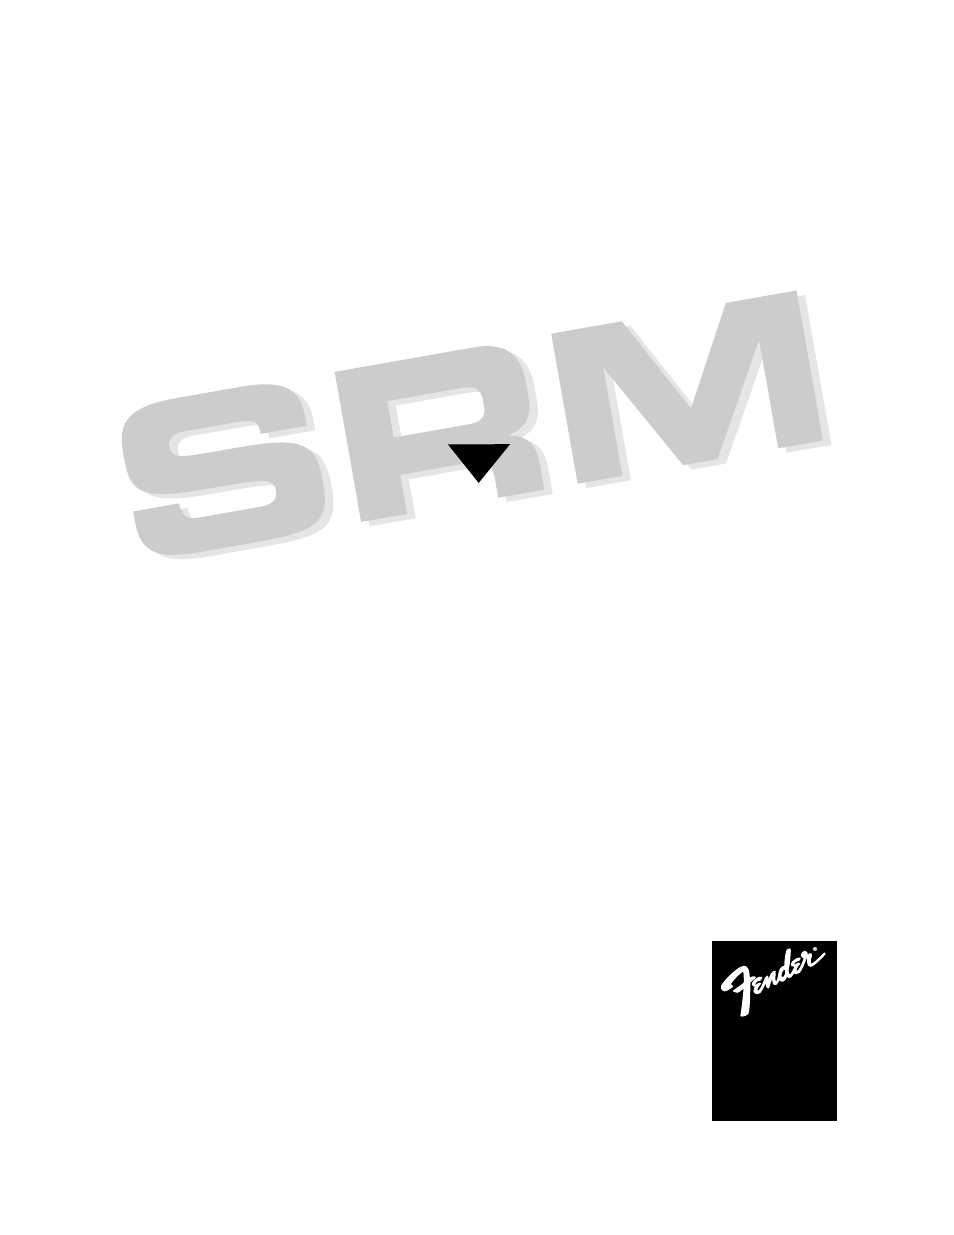 Fender SRM 8302 User Manual | 16 pages